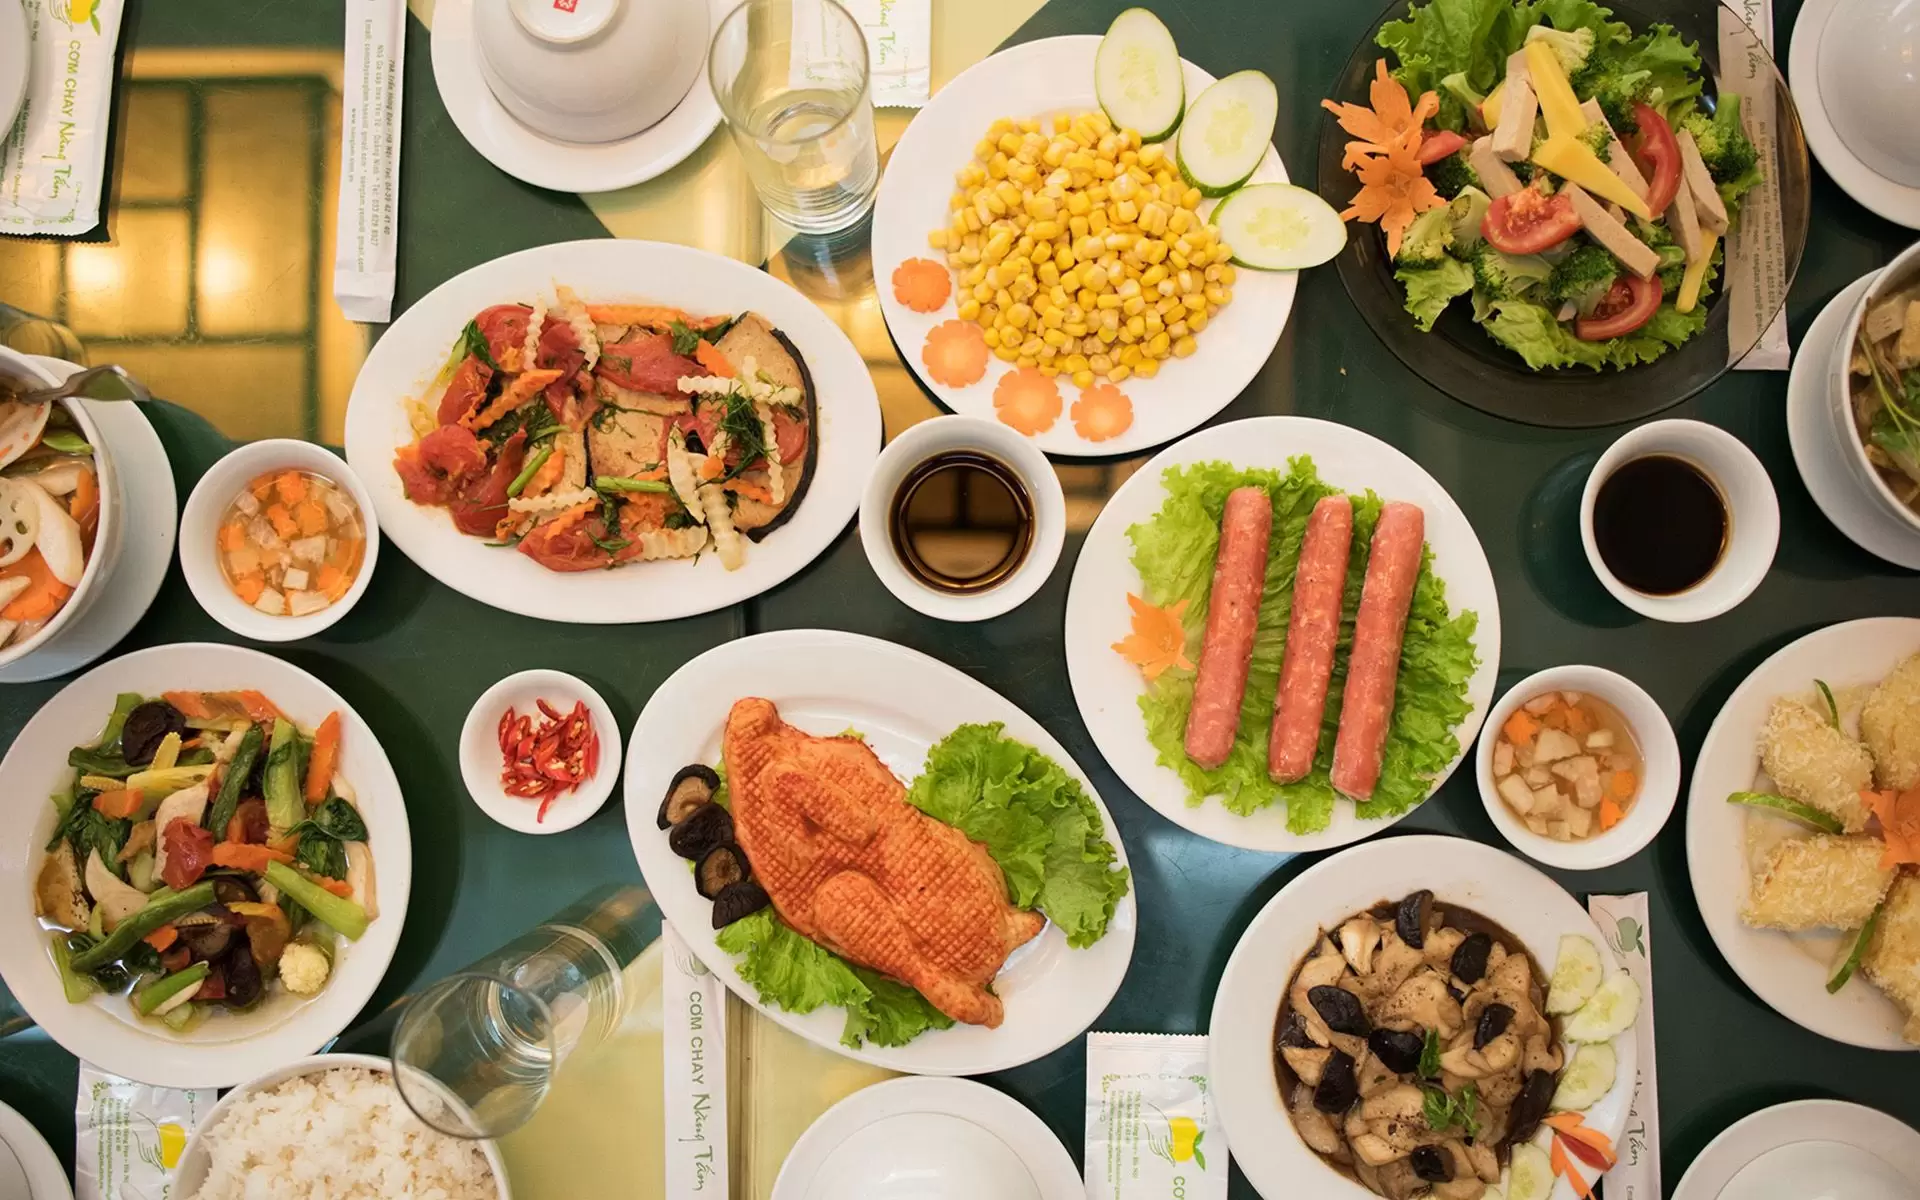 Tasty meal at Nang Tam vegetarian restaurant operated since 1995